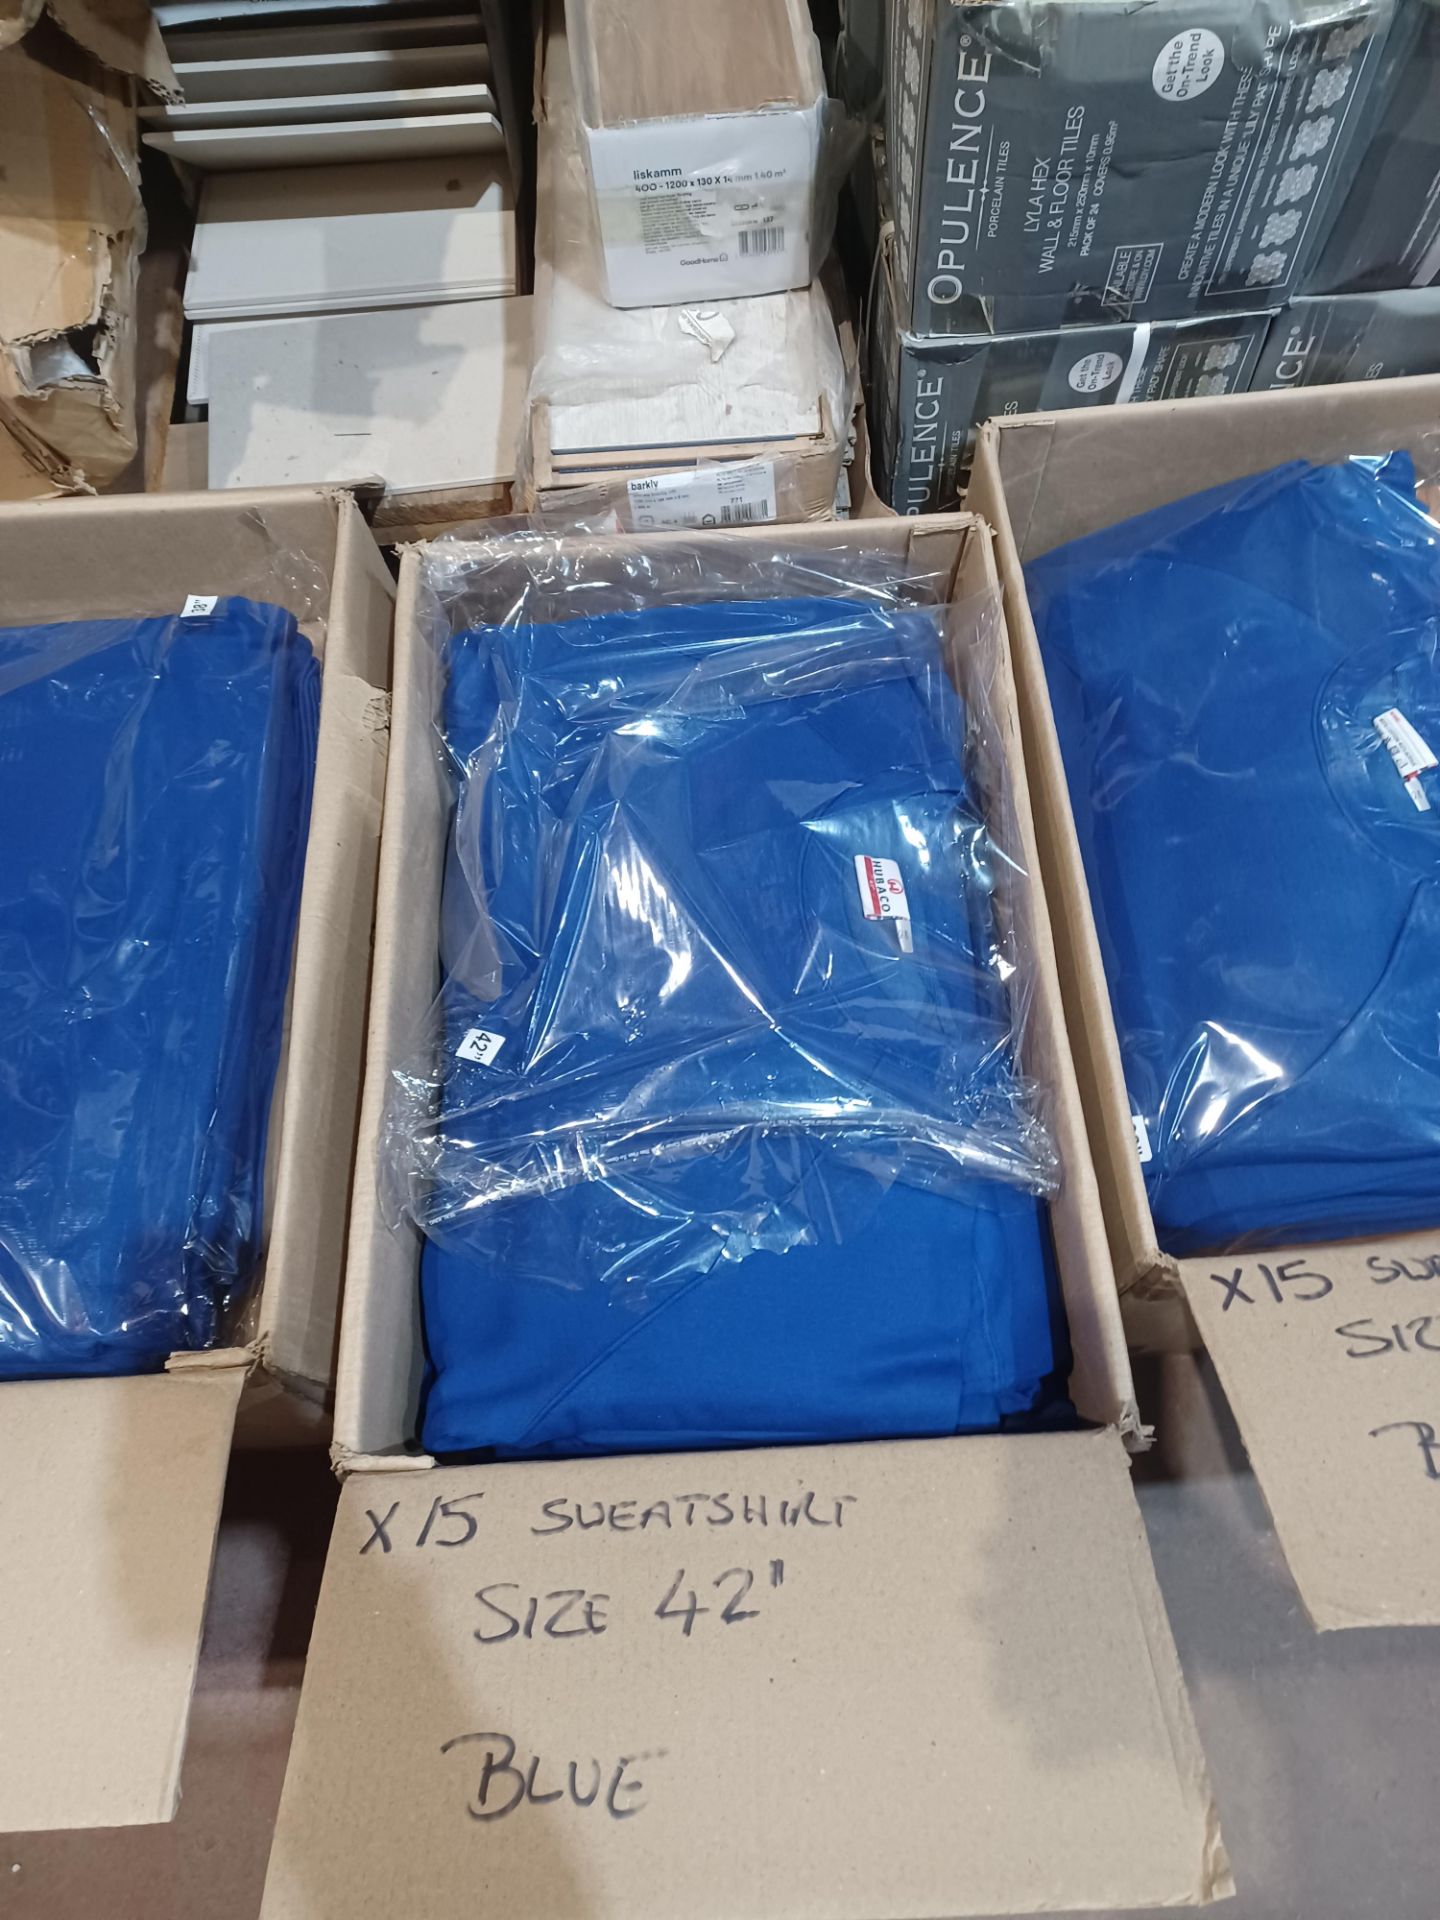 15 x Blue Premium Soft Fleeced Sweatshirts in Size 42". - R14. RRP £14.51 each